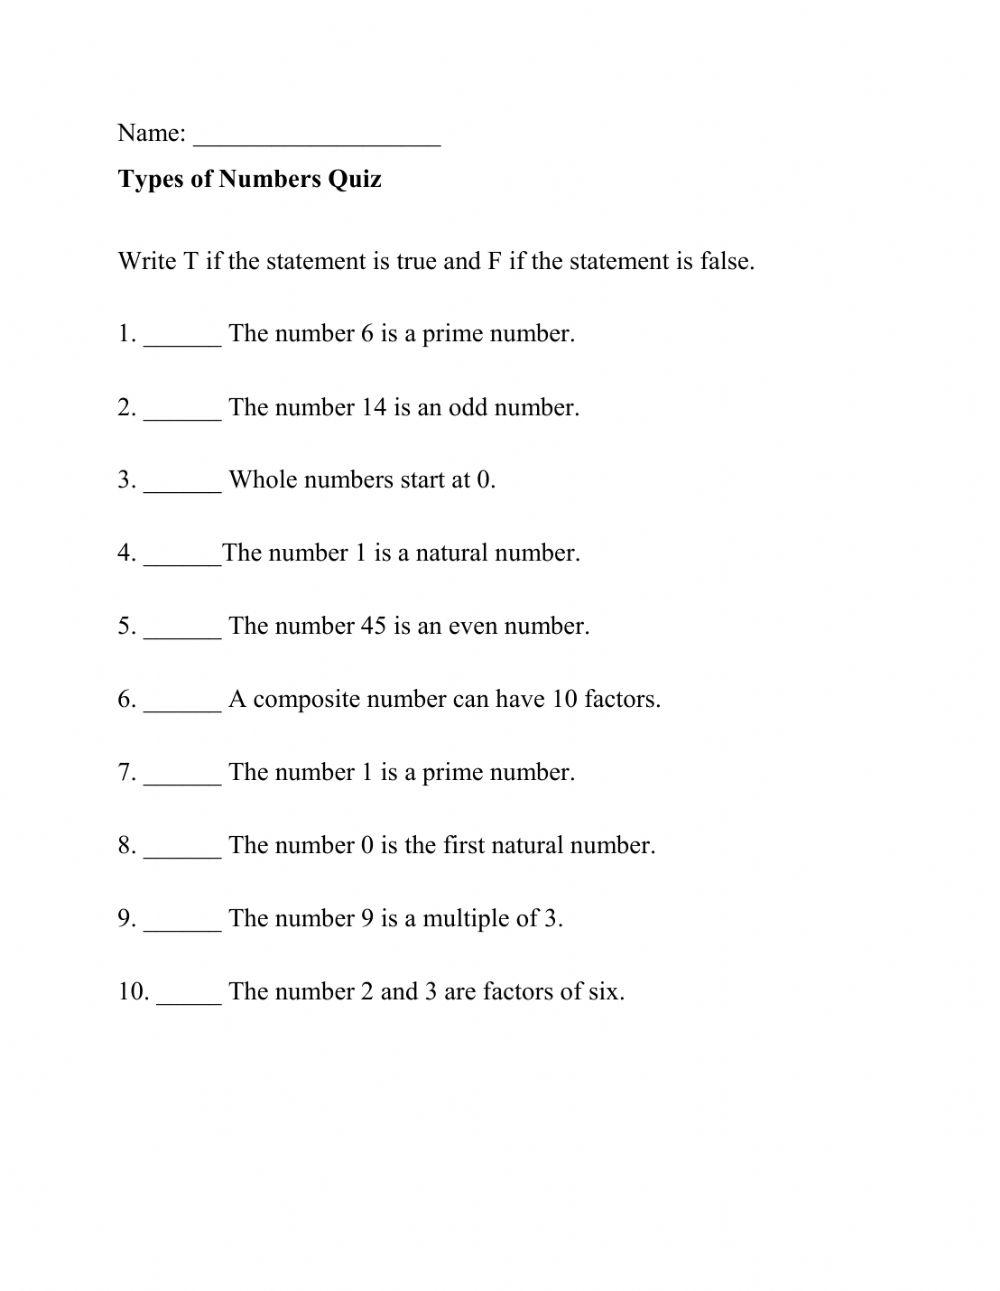 Types of numbers quiz